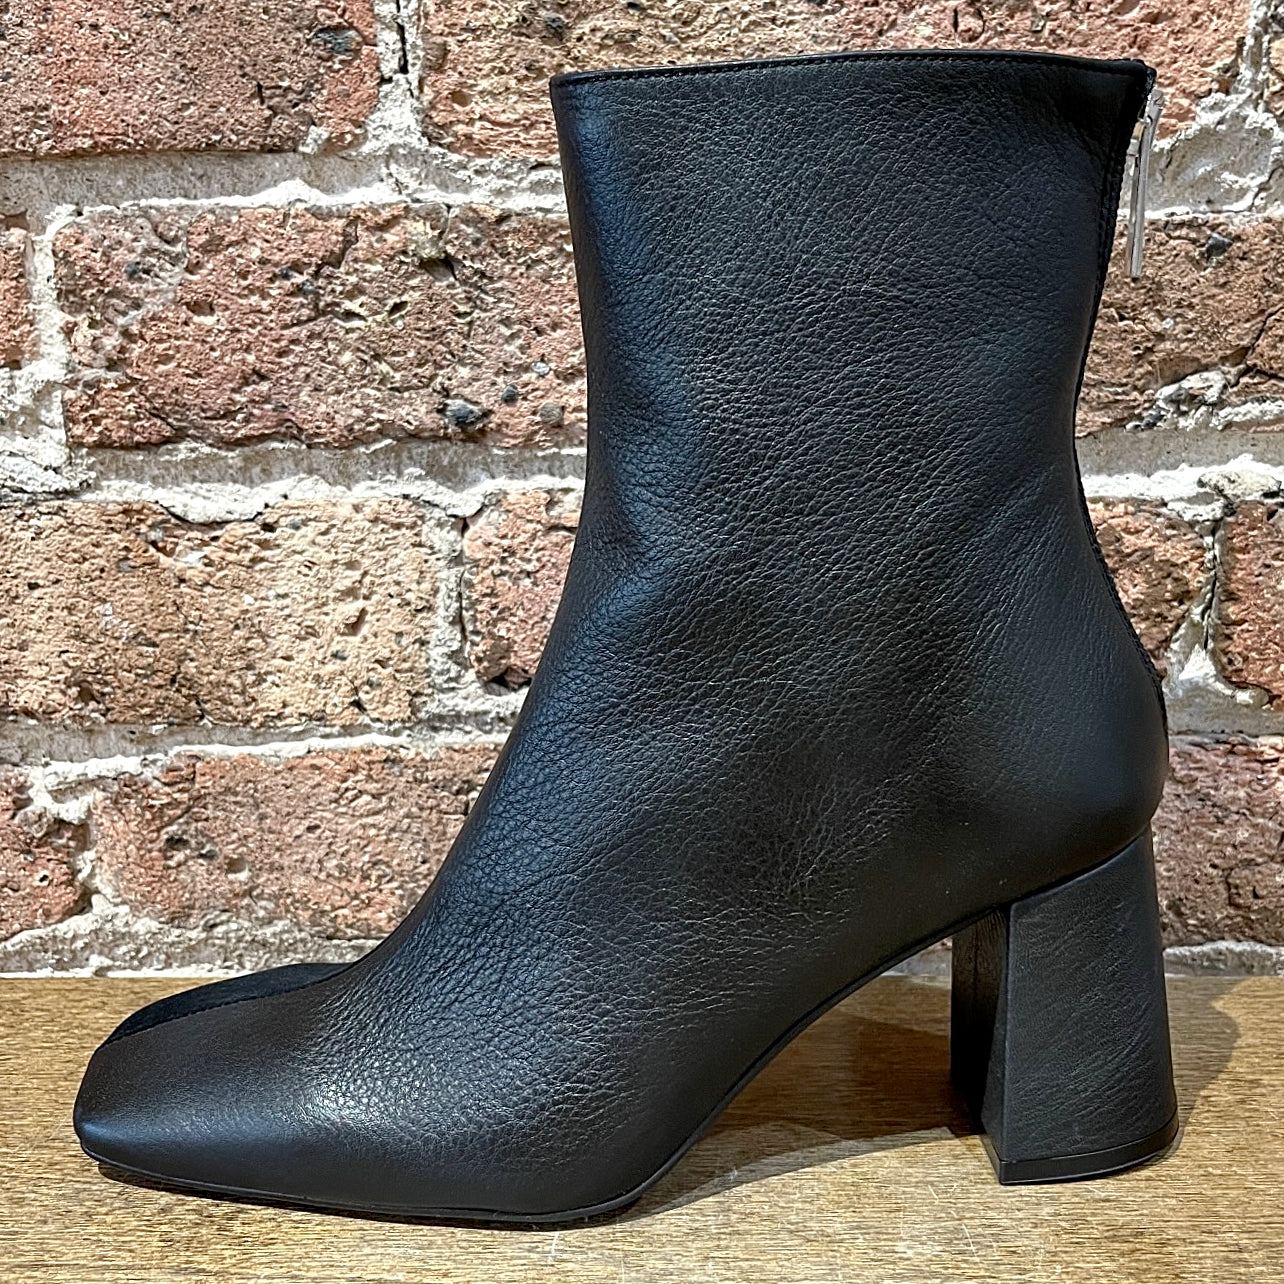 Tabatha Leather Heeled Boots